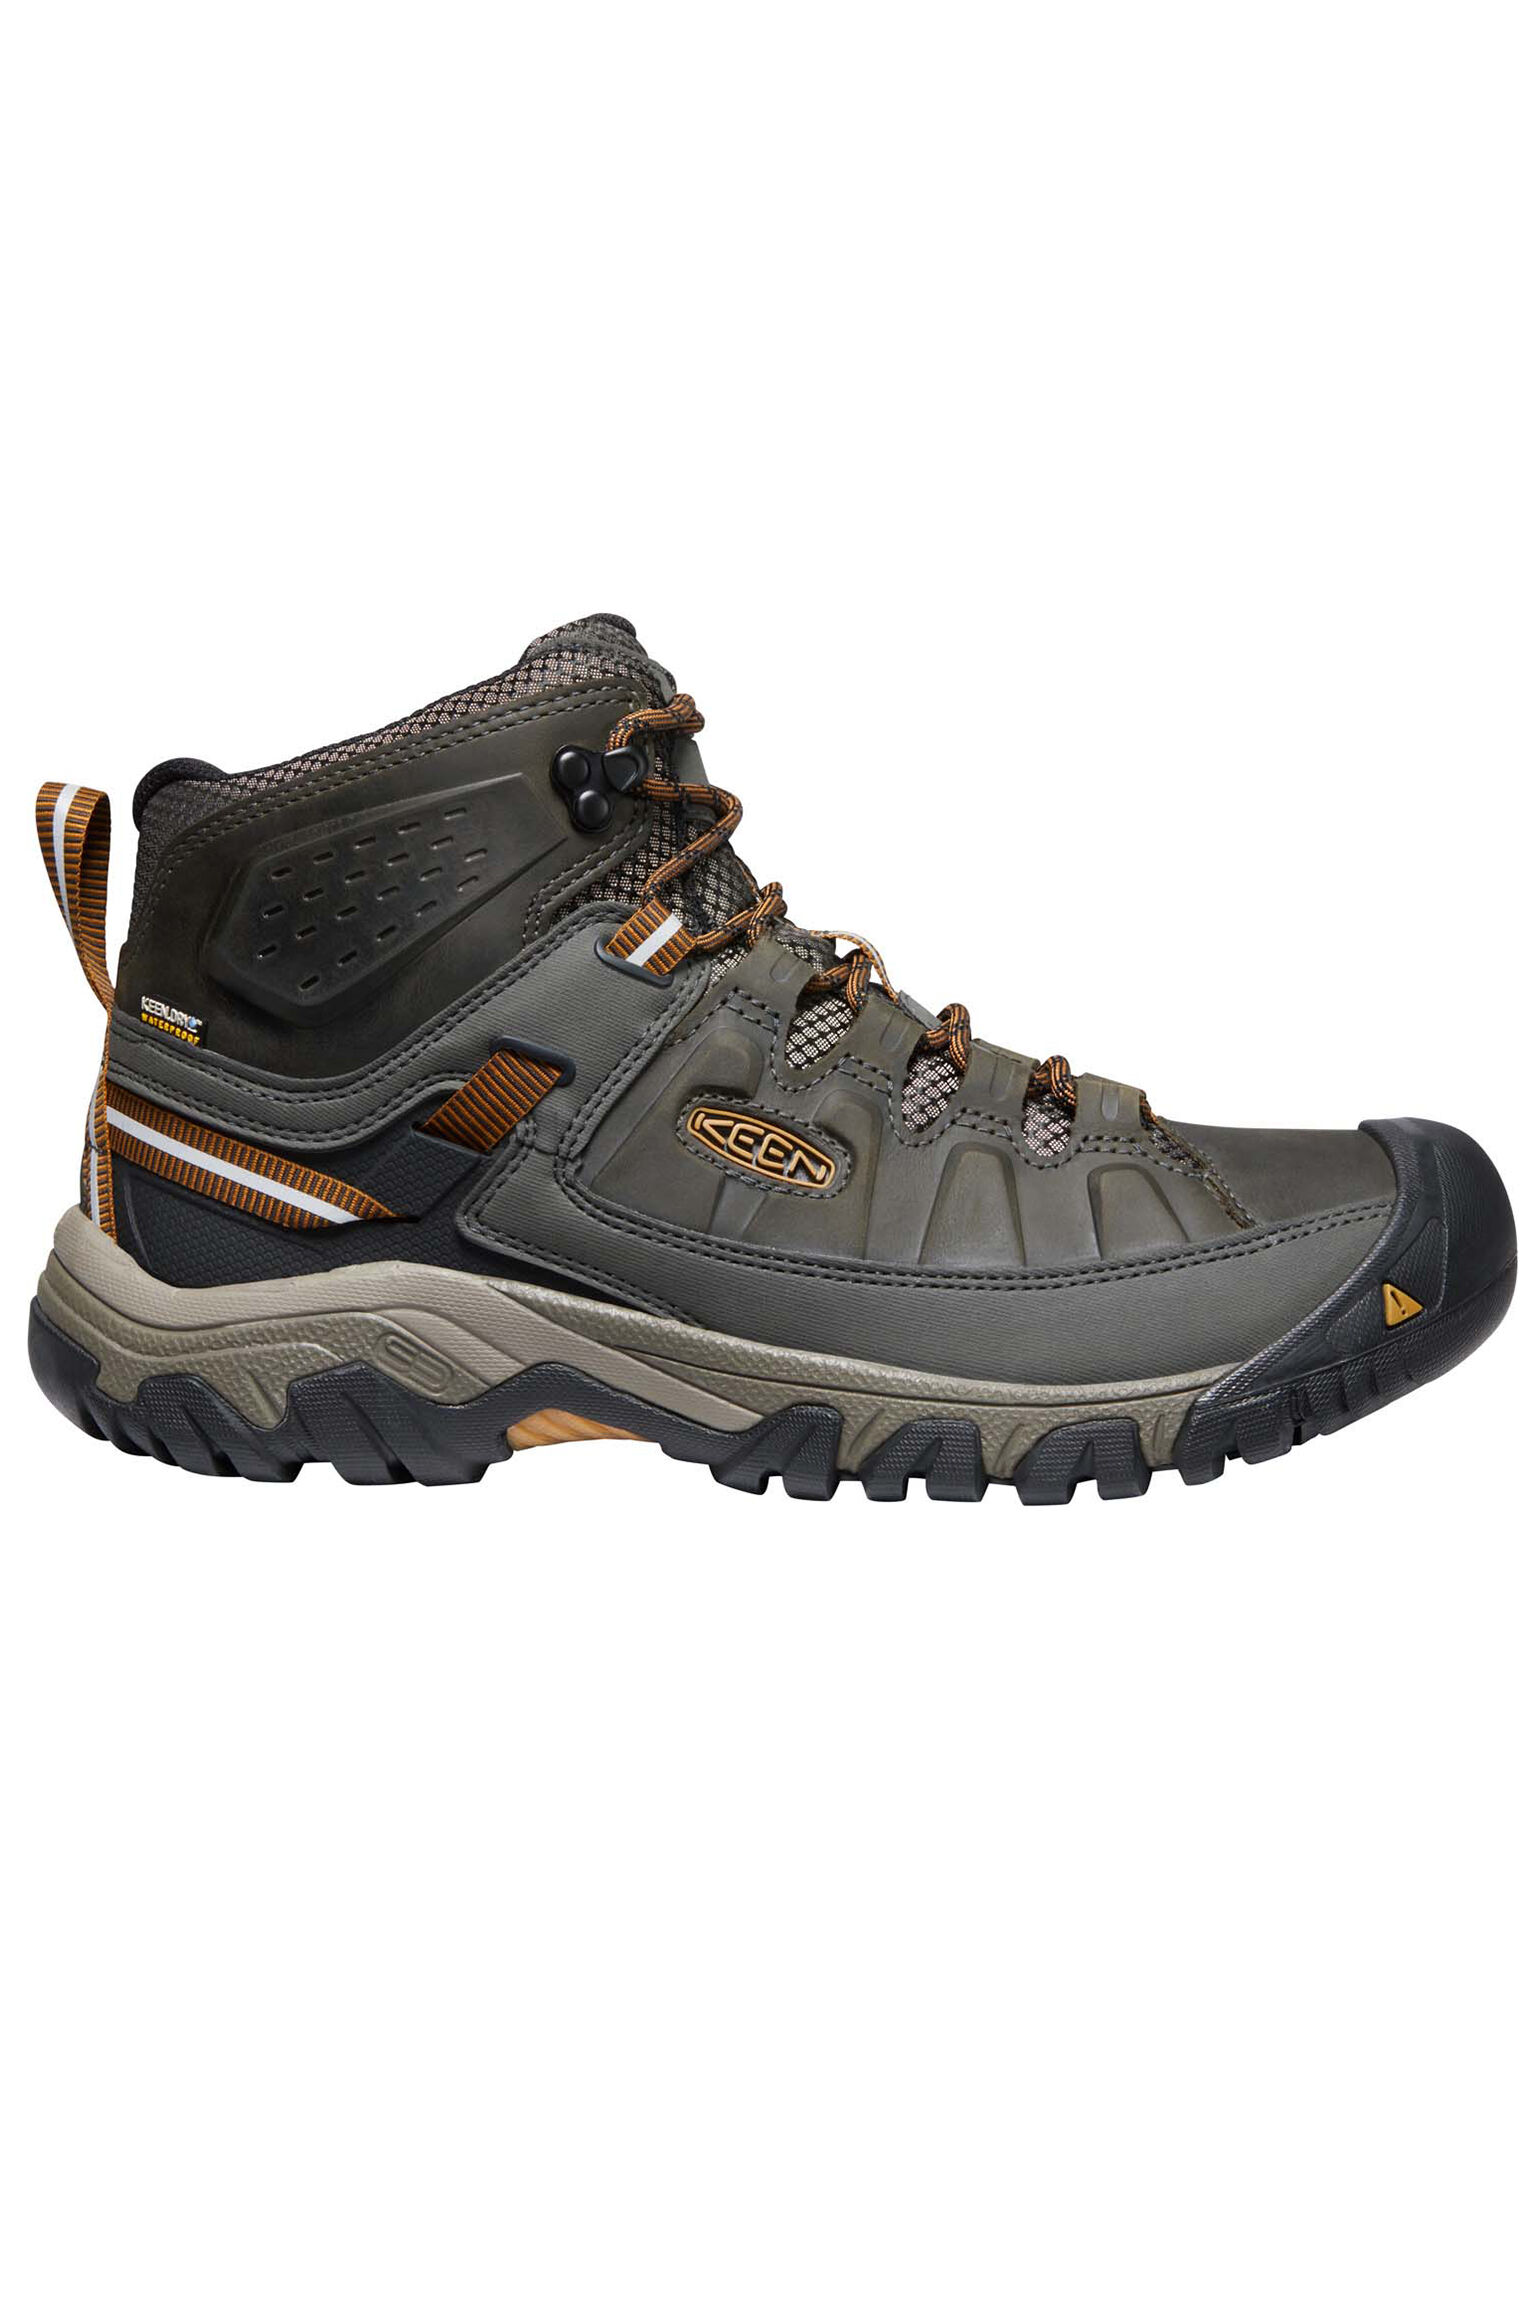 Clearance: Keen Targhee III Men's Mid Waterproof Hiking Boots | Kathmandu NZ